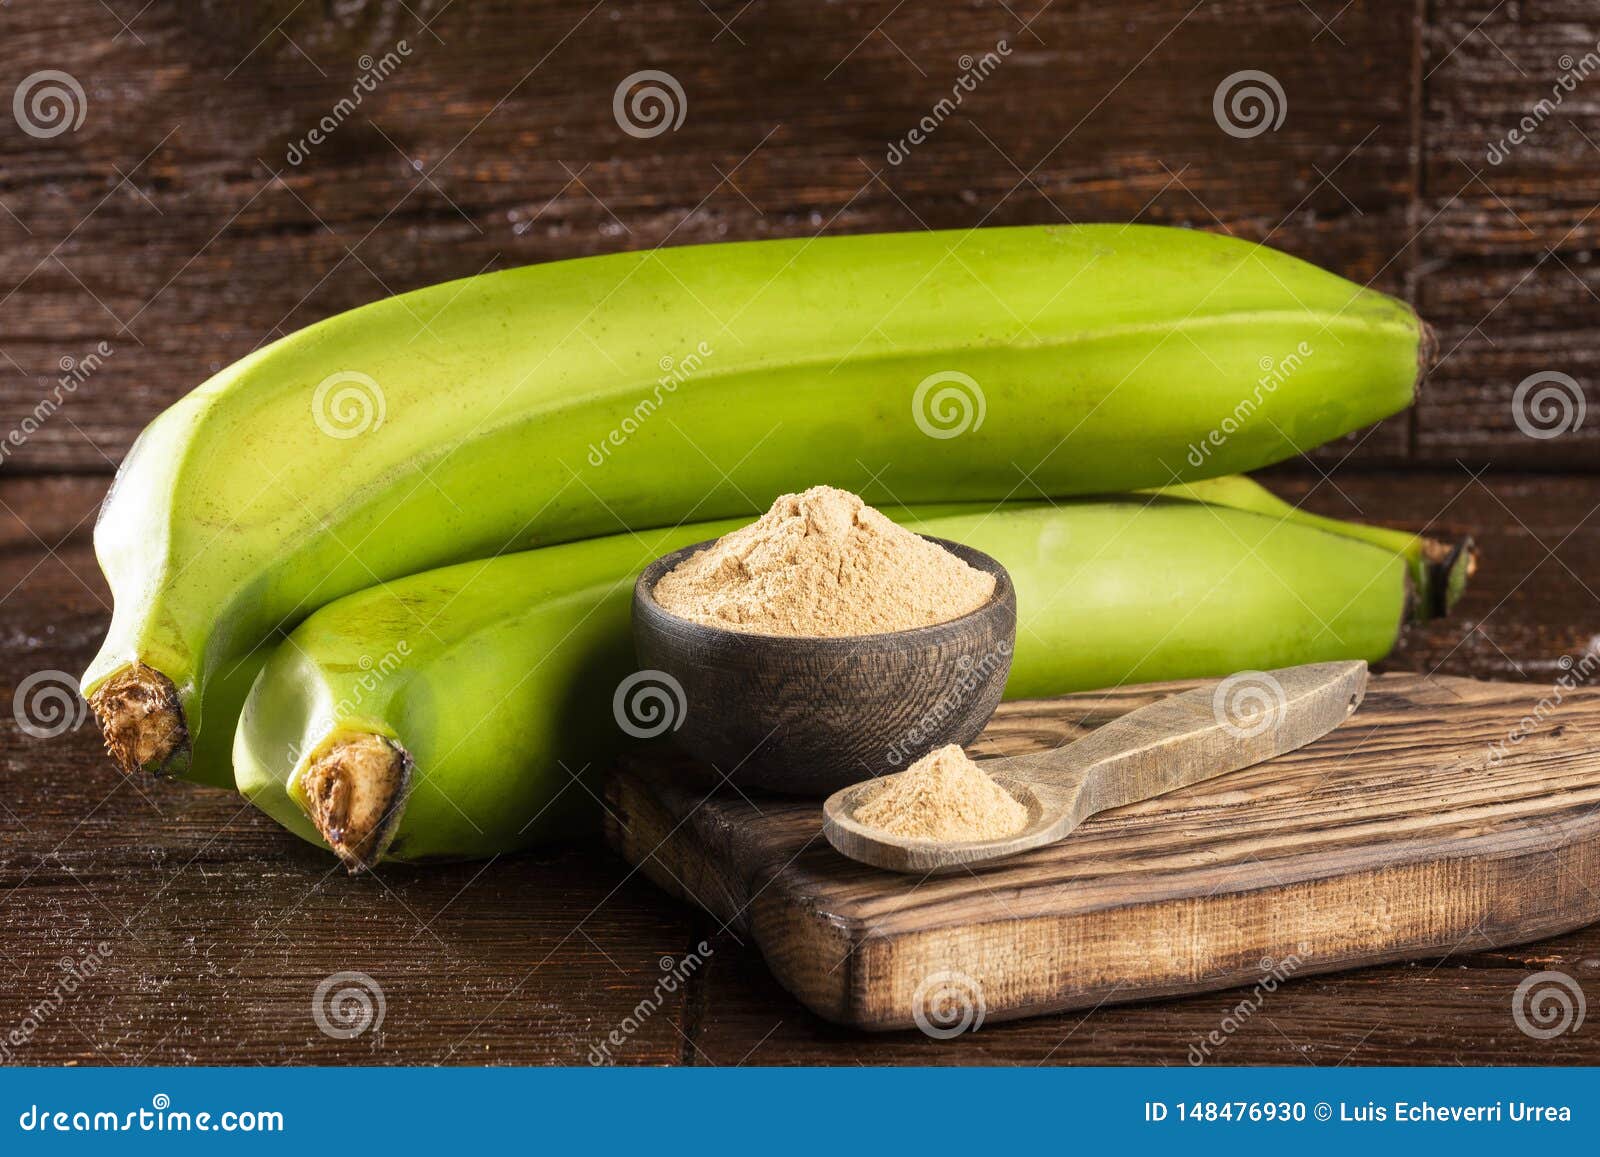 green plantain flour - musa paradisiaca